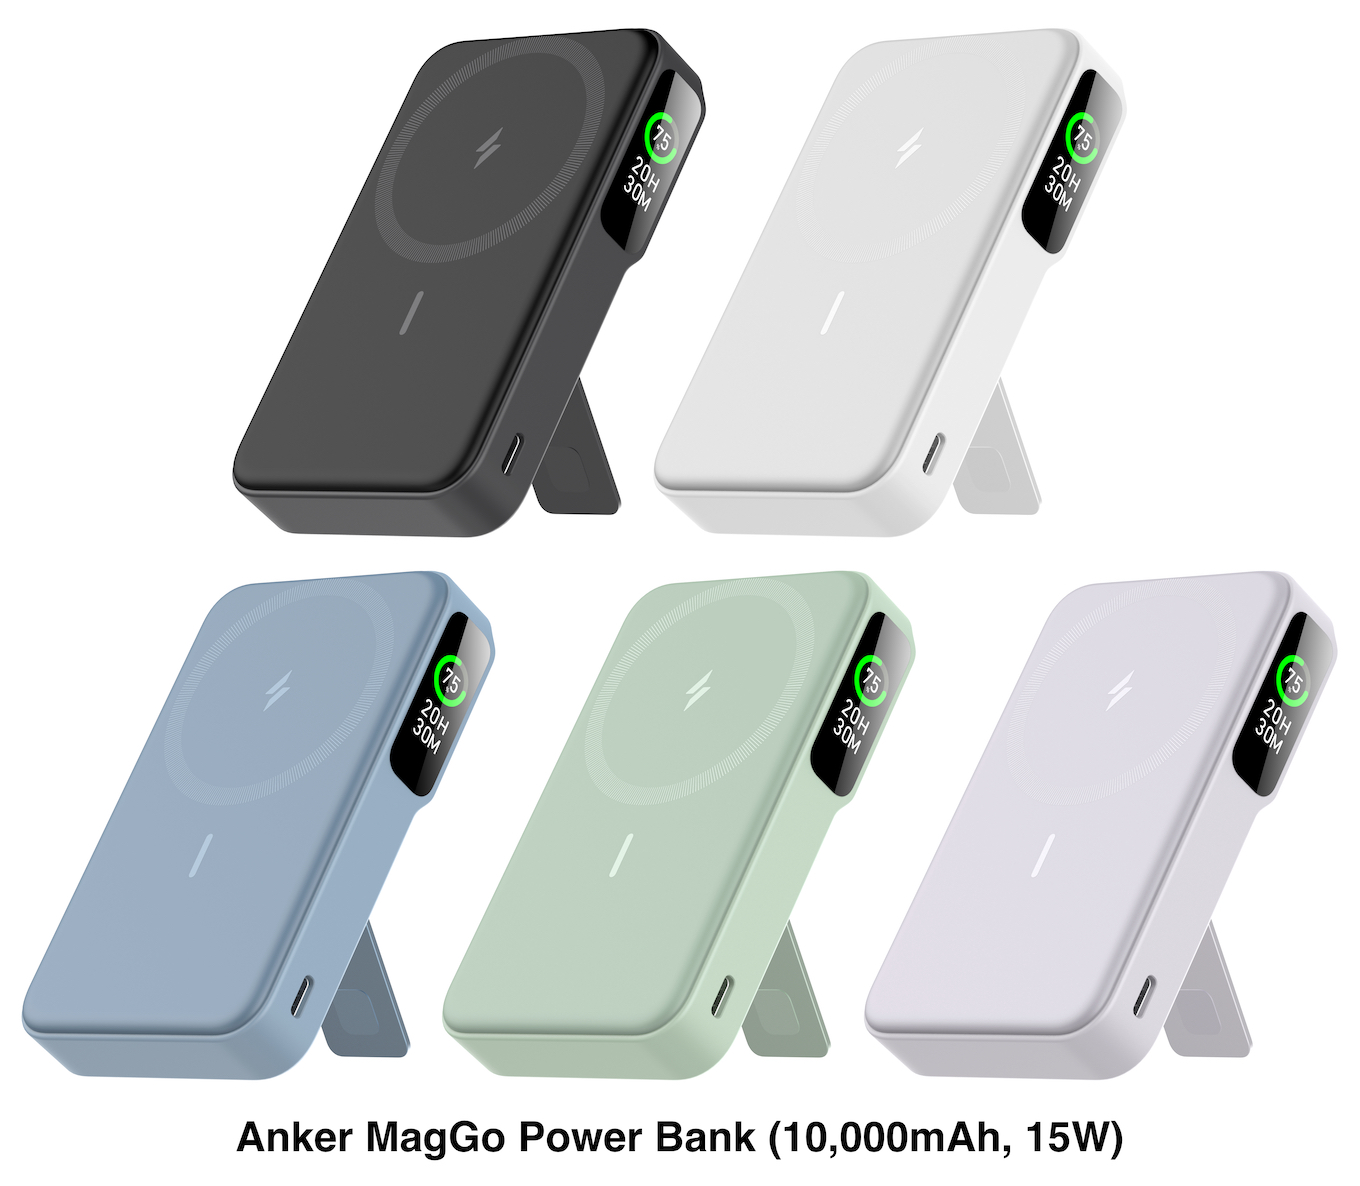 Anker MagGo Power Bank (10,000mAh, 15W)